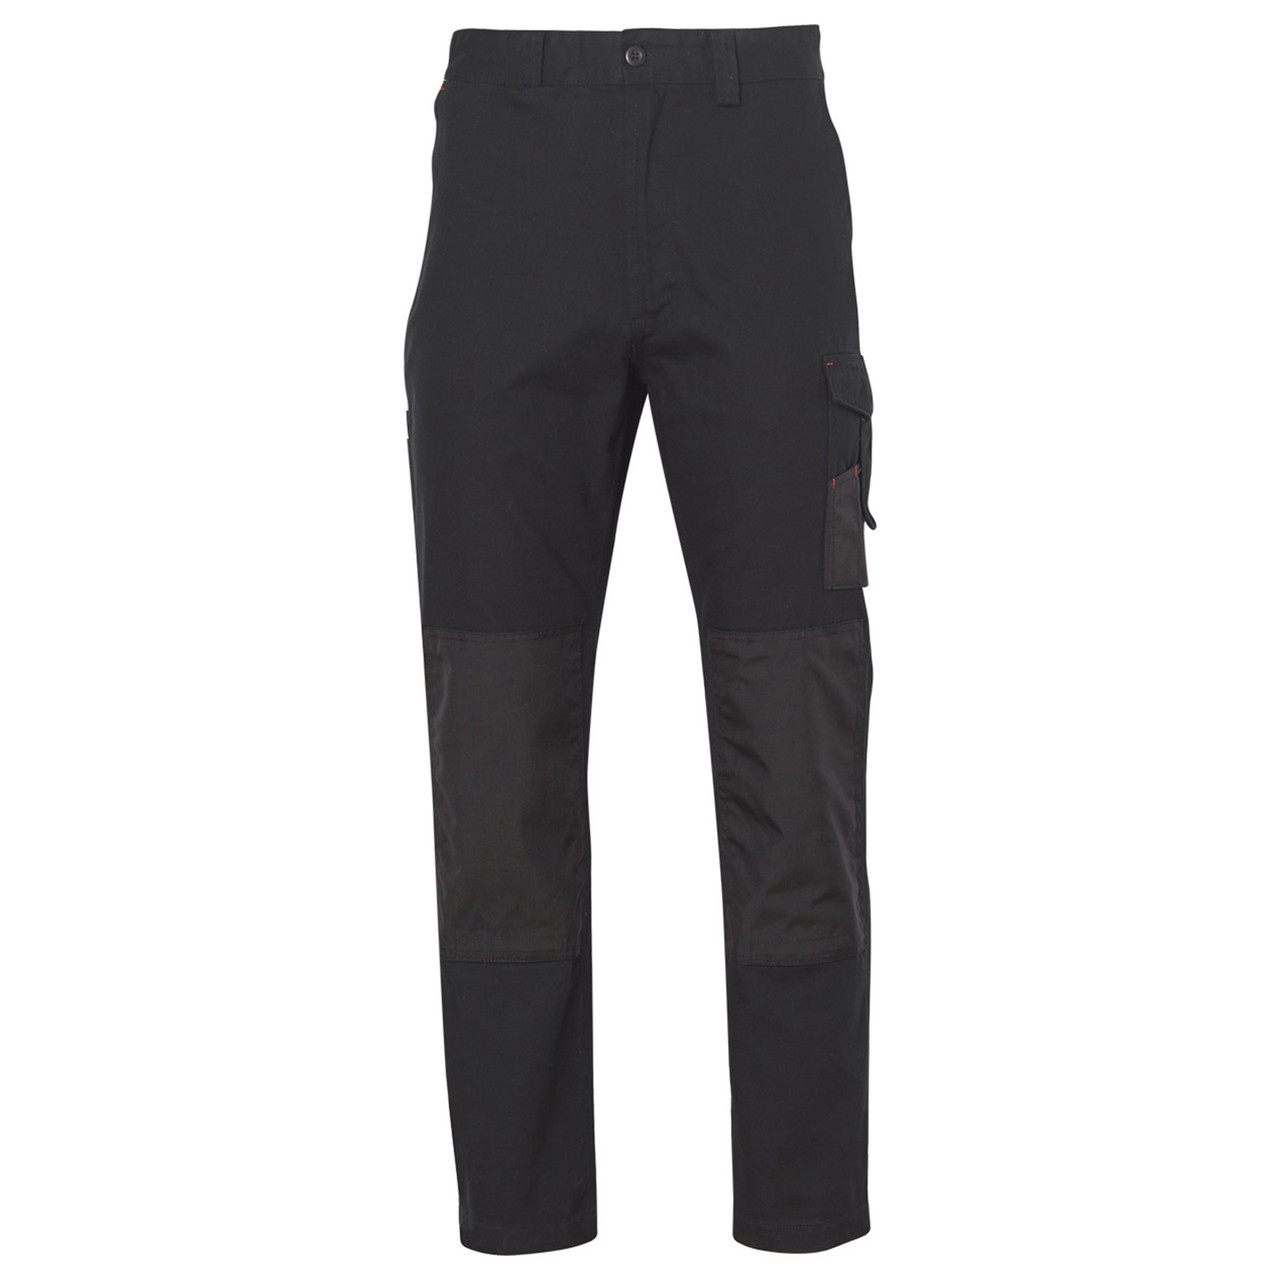 Mens Cordura Durable Work Pants | Shop Work Safety Wear Online